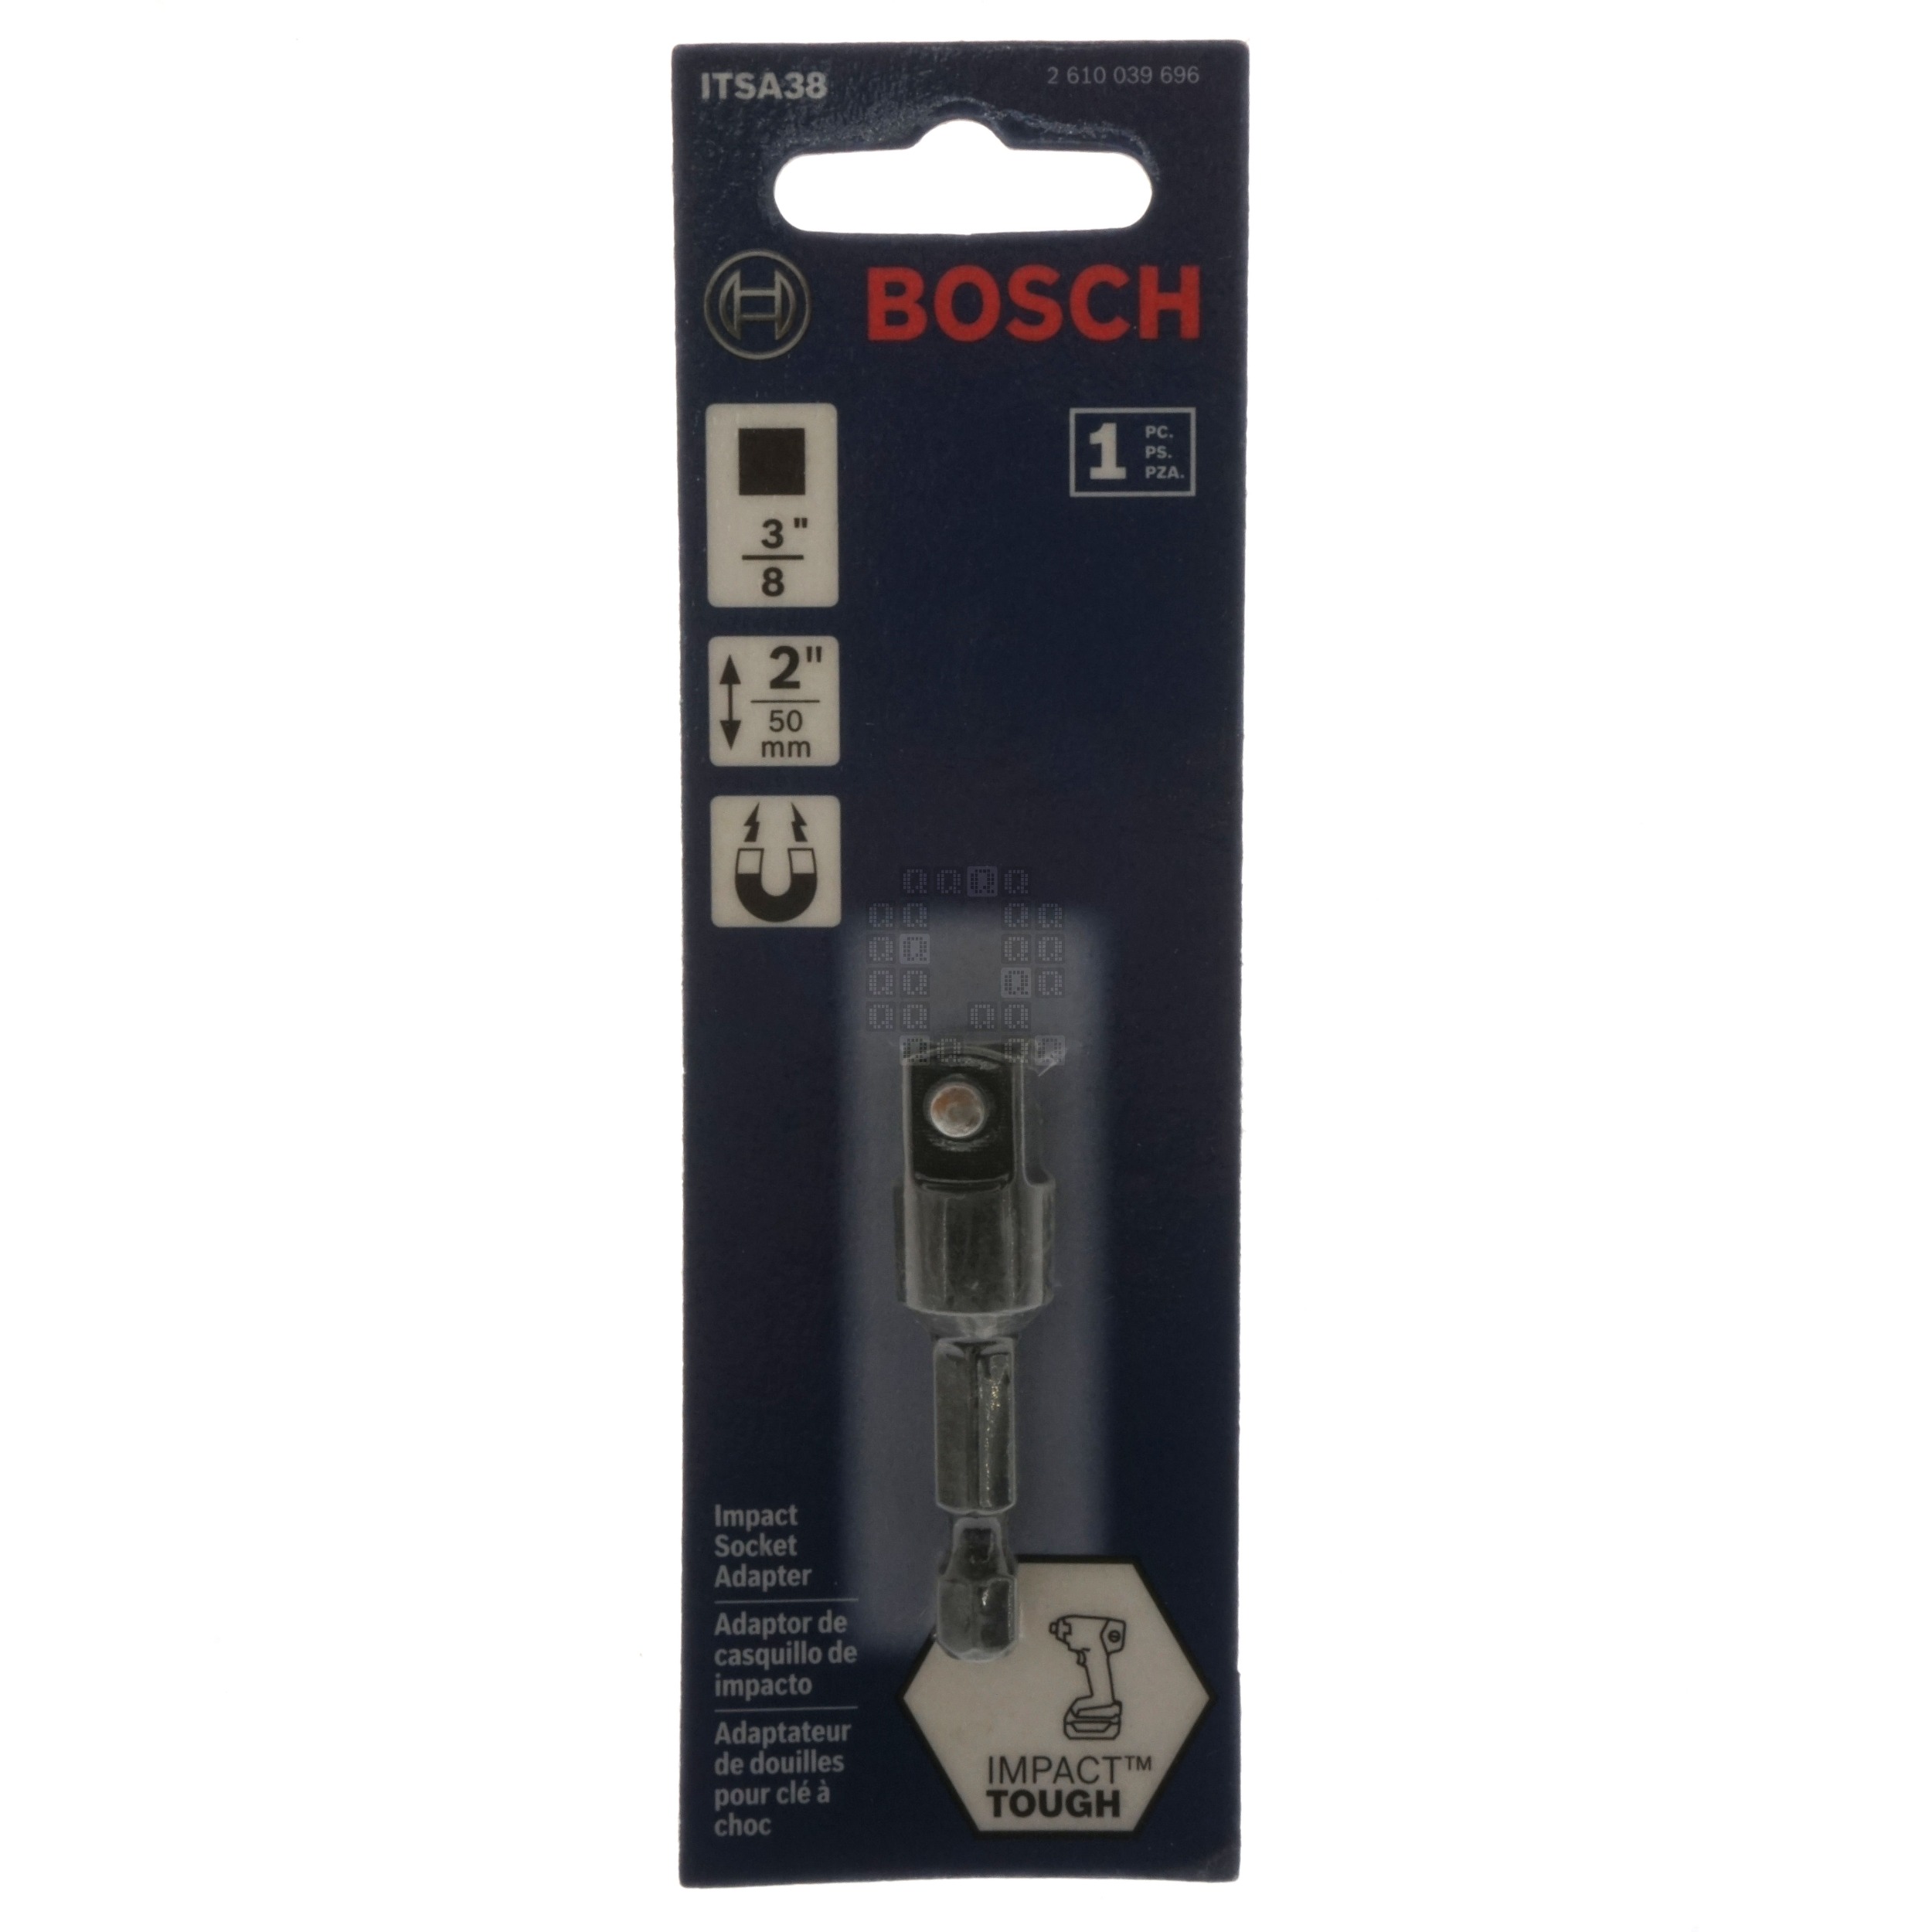 Bosch 2610039696 ITSA38 Impact Tough 1/4" Hex to 3/8" Square Socket Adapter, 2" Length